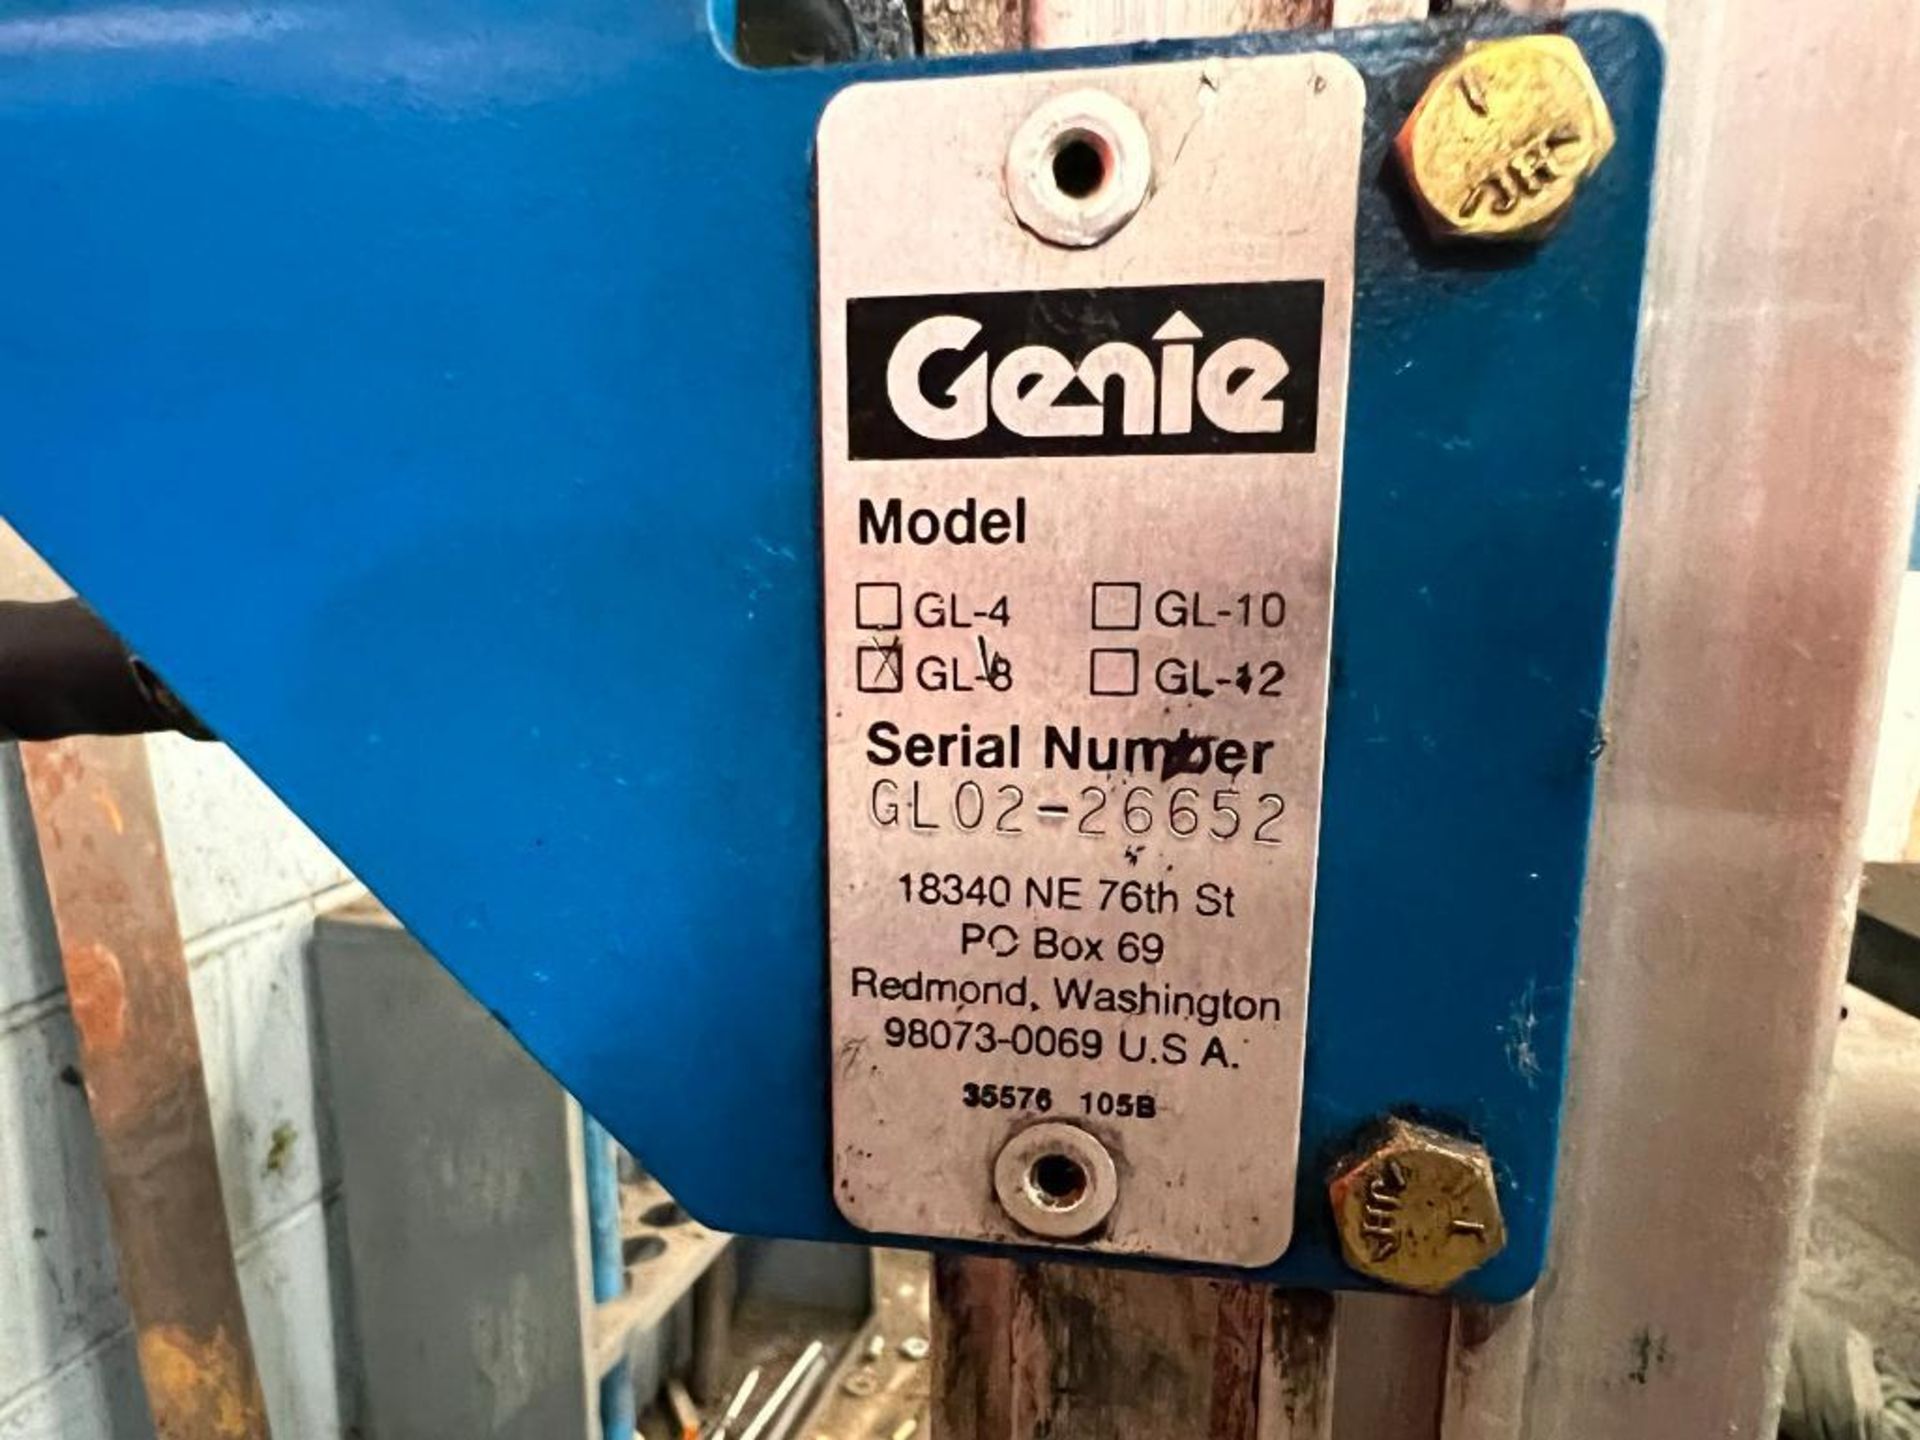 Genie Manual Material Lift Model GL-8, S/N GL02-26652 - Image 4 of 4